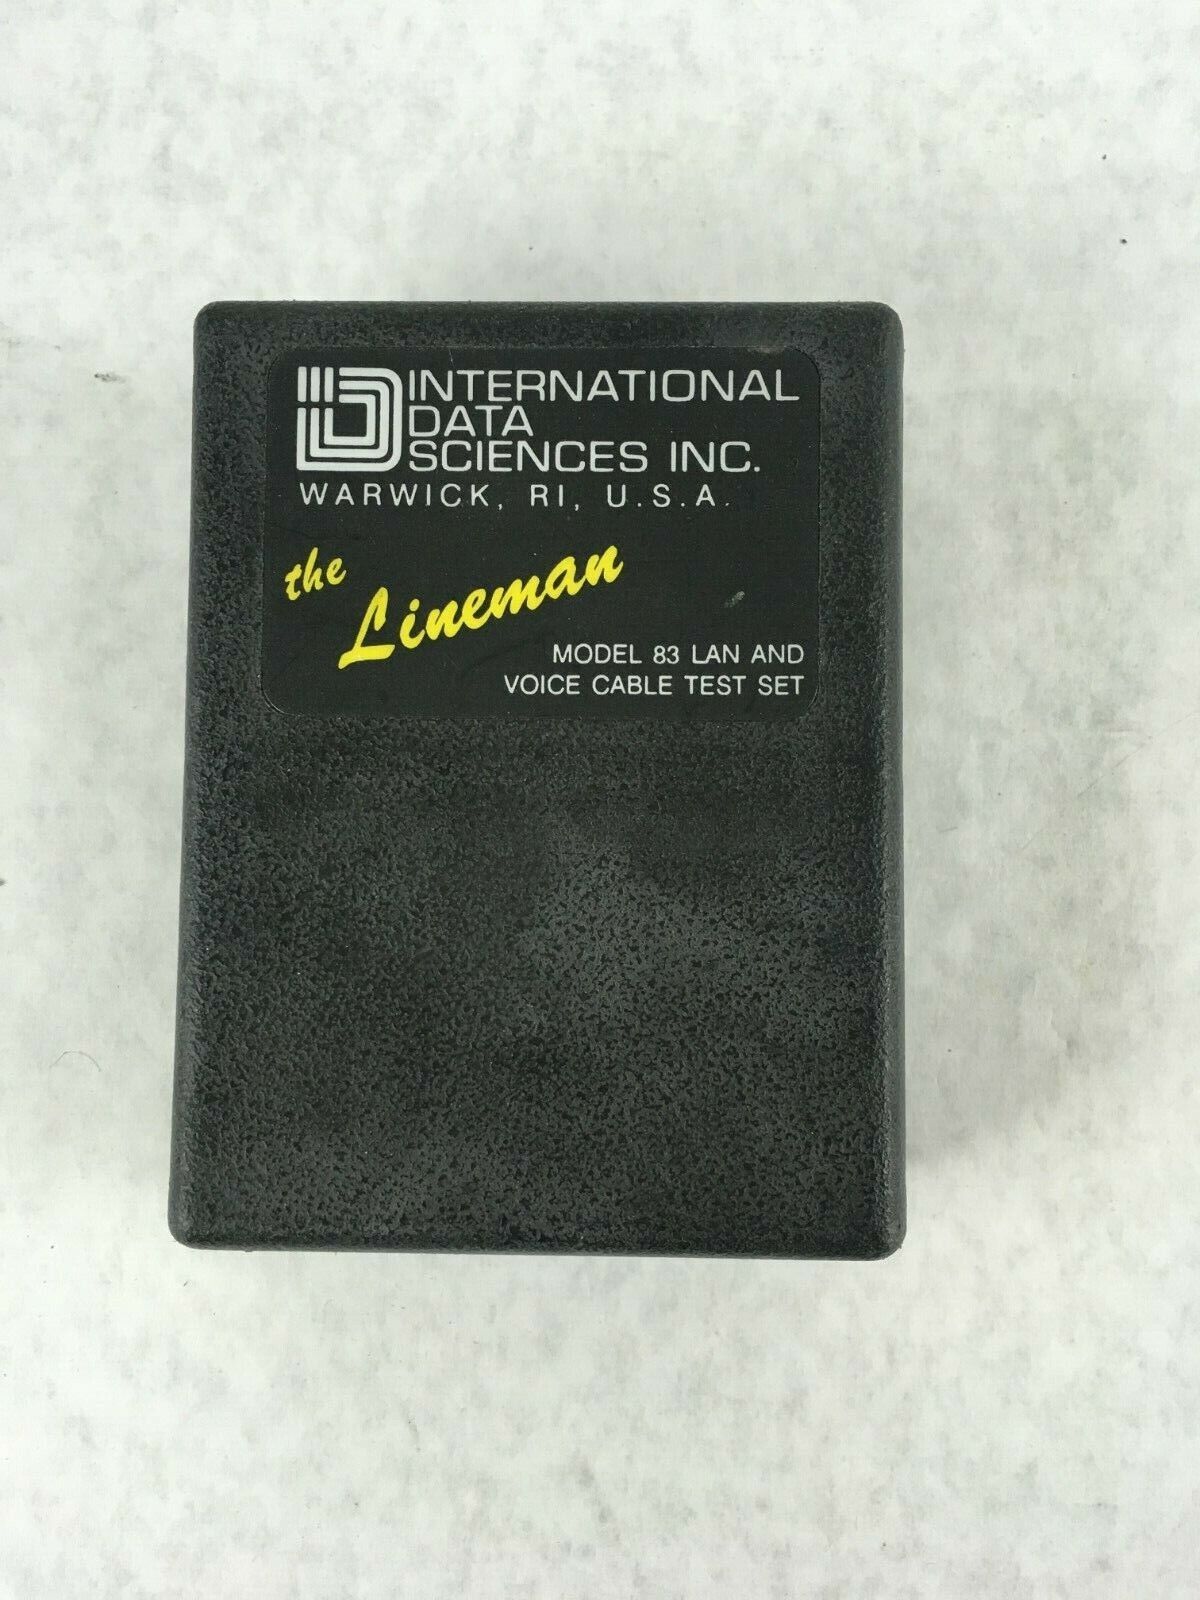 IDS The Lineman Model 83 Lan Voice Cable Test Set